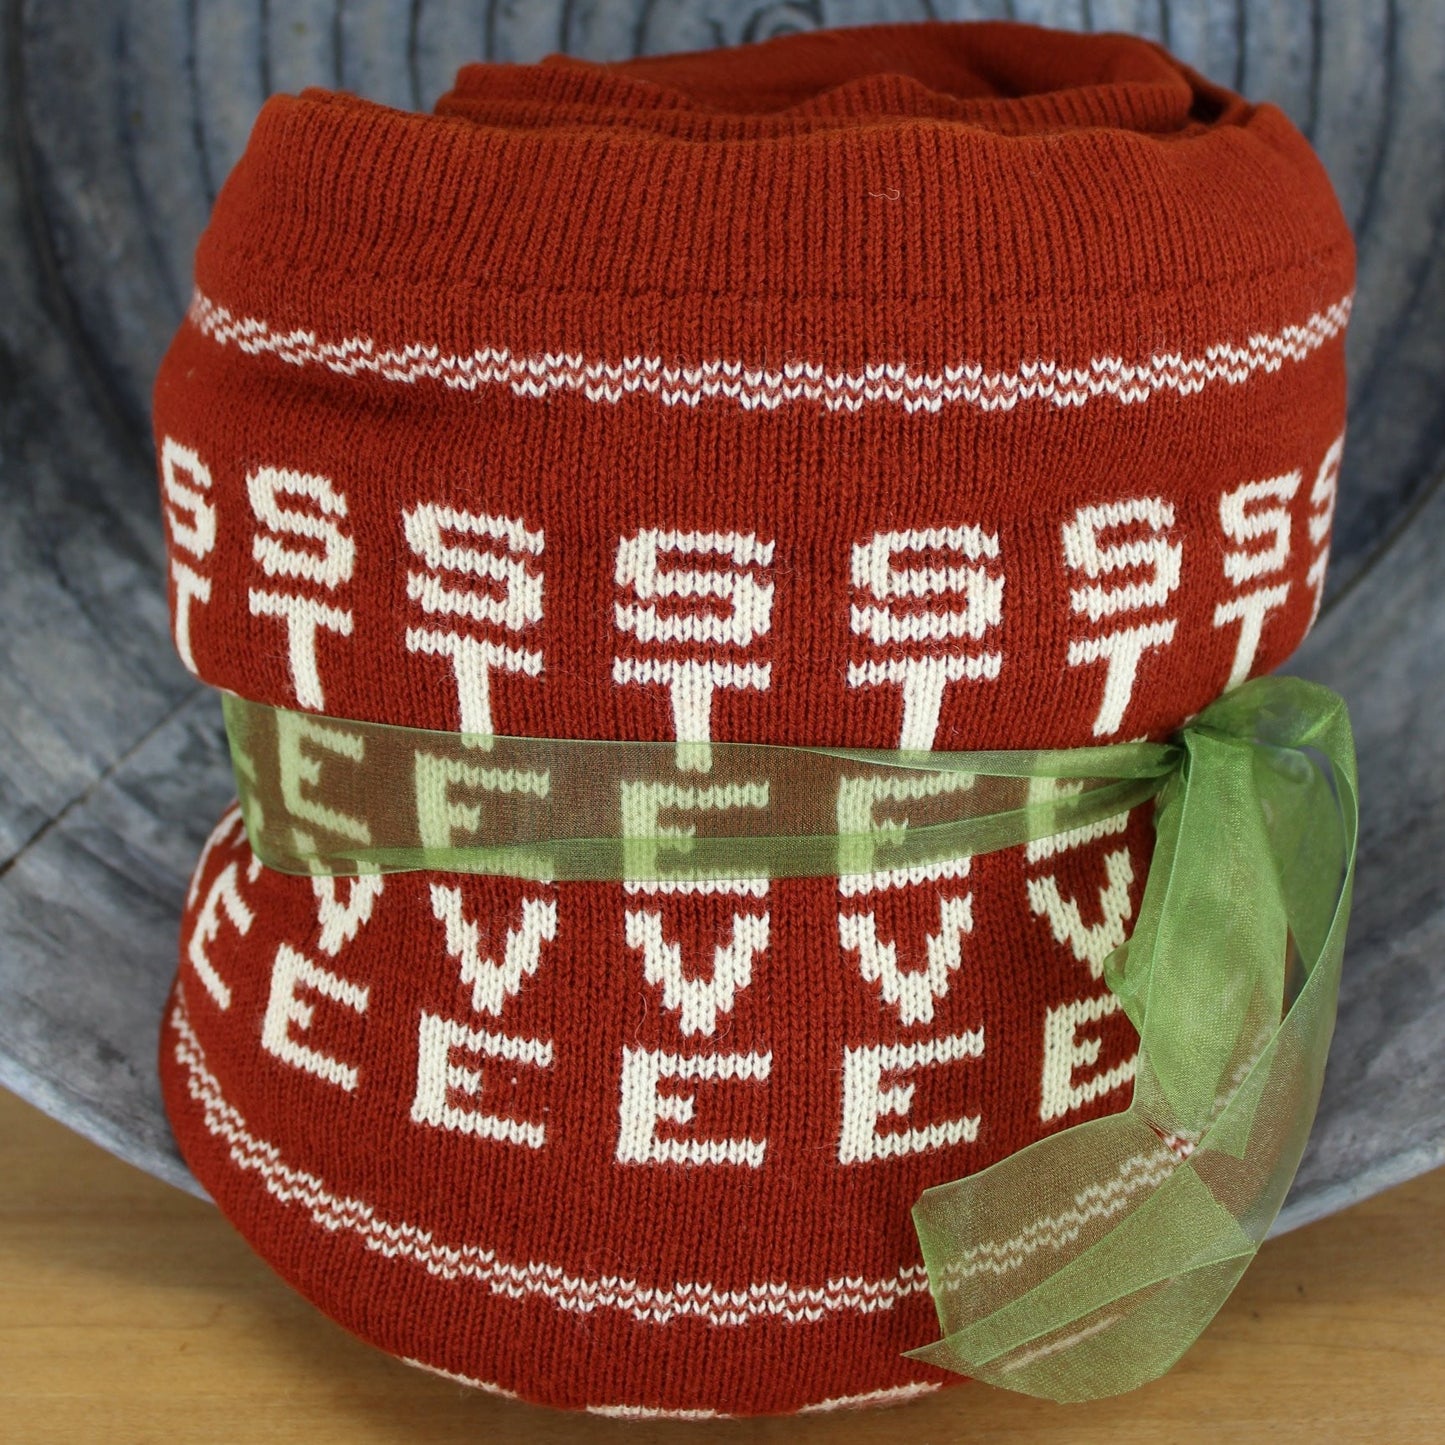 Vintage Unbranded Acrylic Throw Blanket - "STEVE" Monogram Hand Knit Christmas 1982 Reversible - 54" X 70" OAO